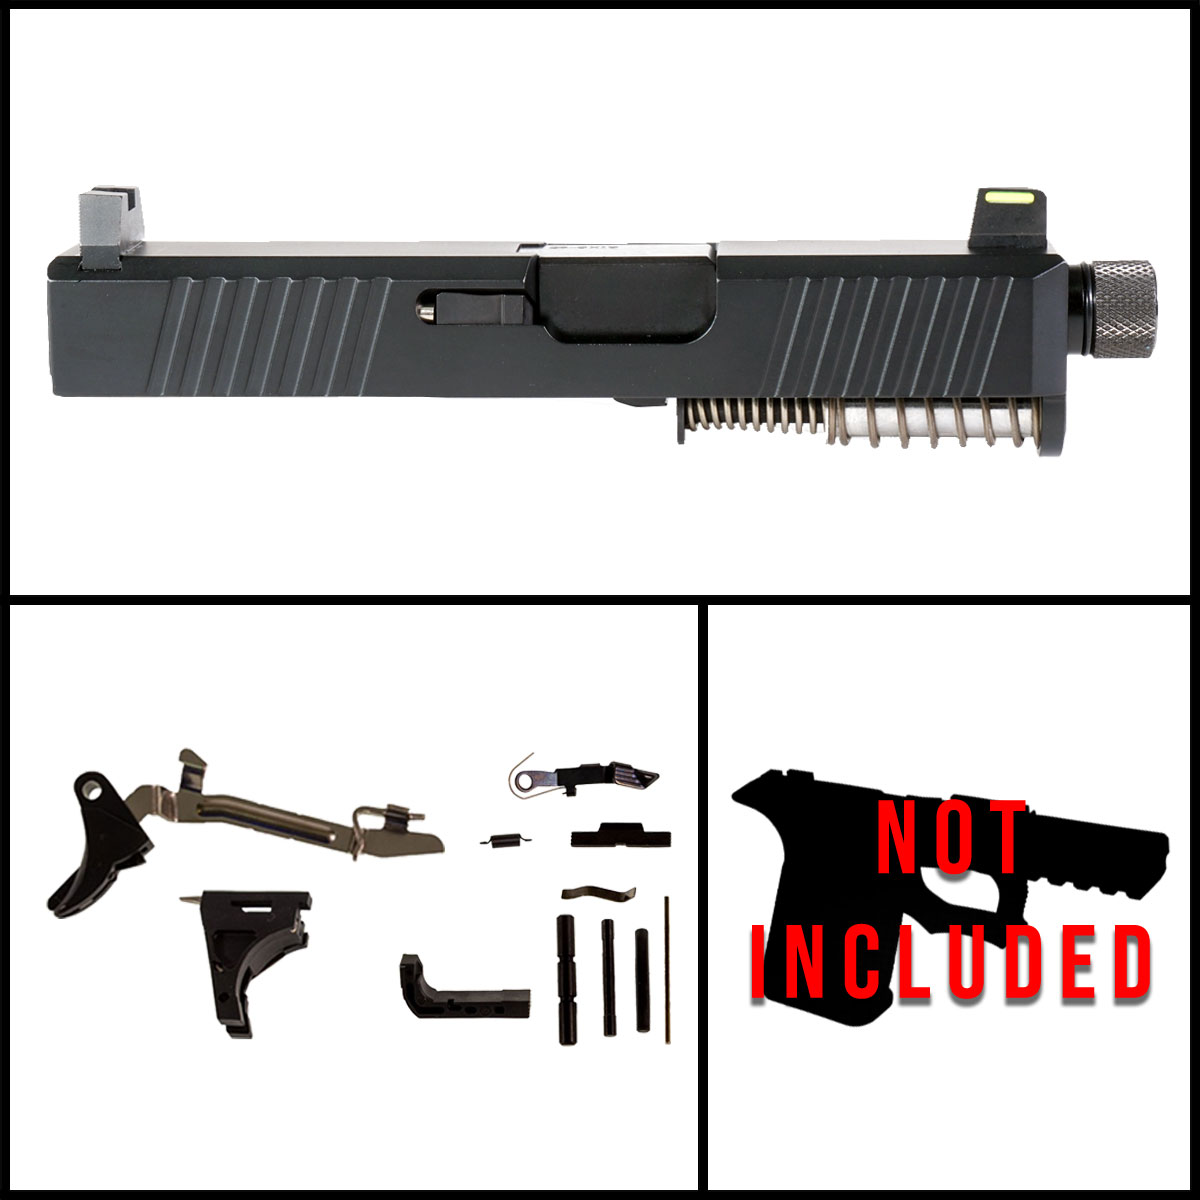 DTT 'Homeland Security' 9mm Full Gun Kit - Glock 26 Gen 1-3 Compatible